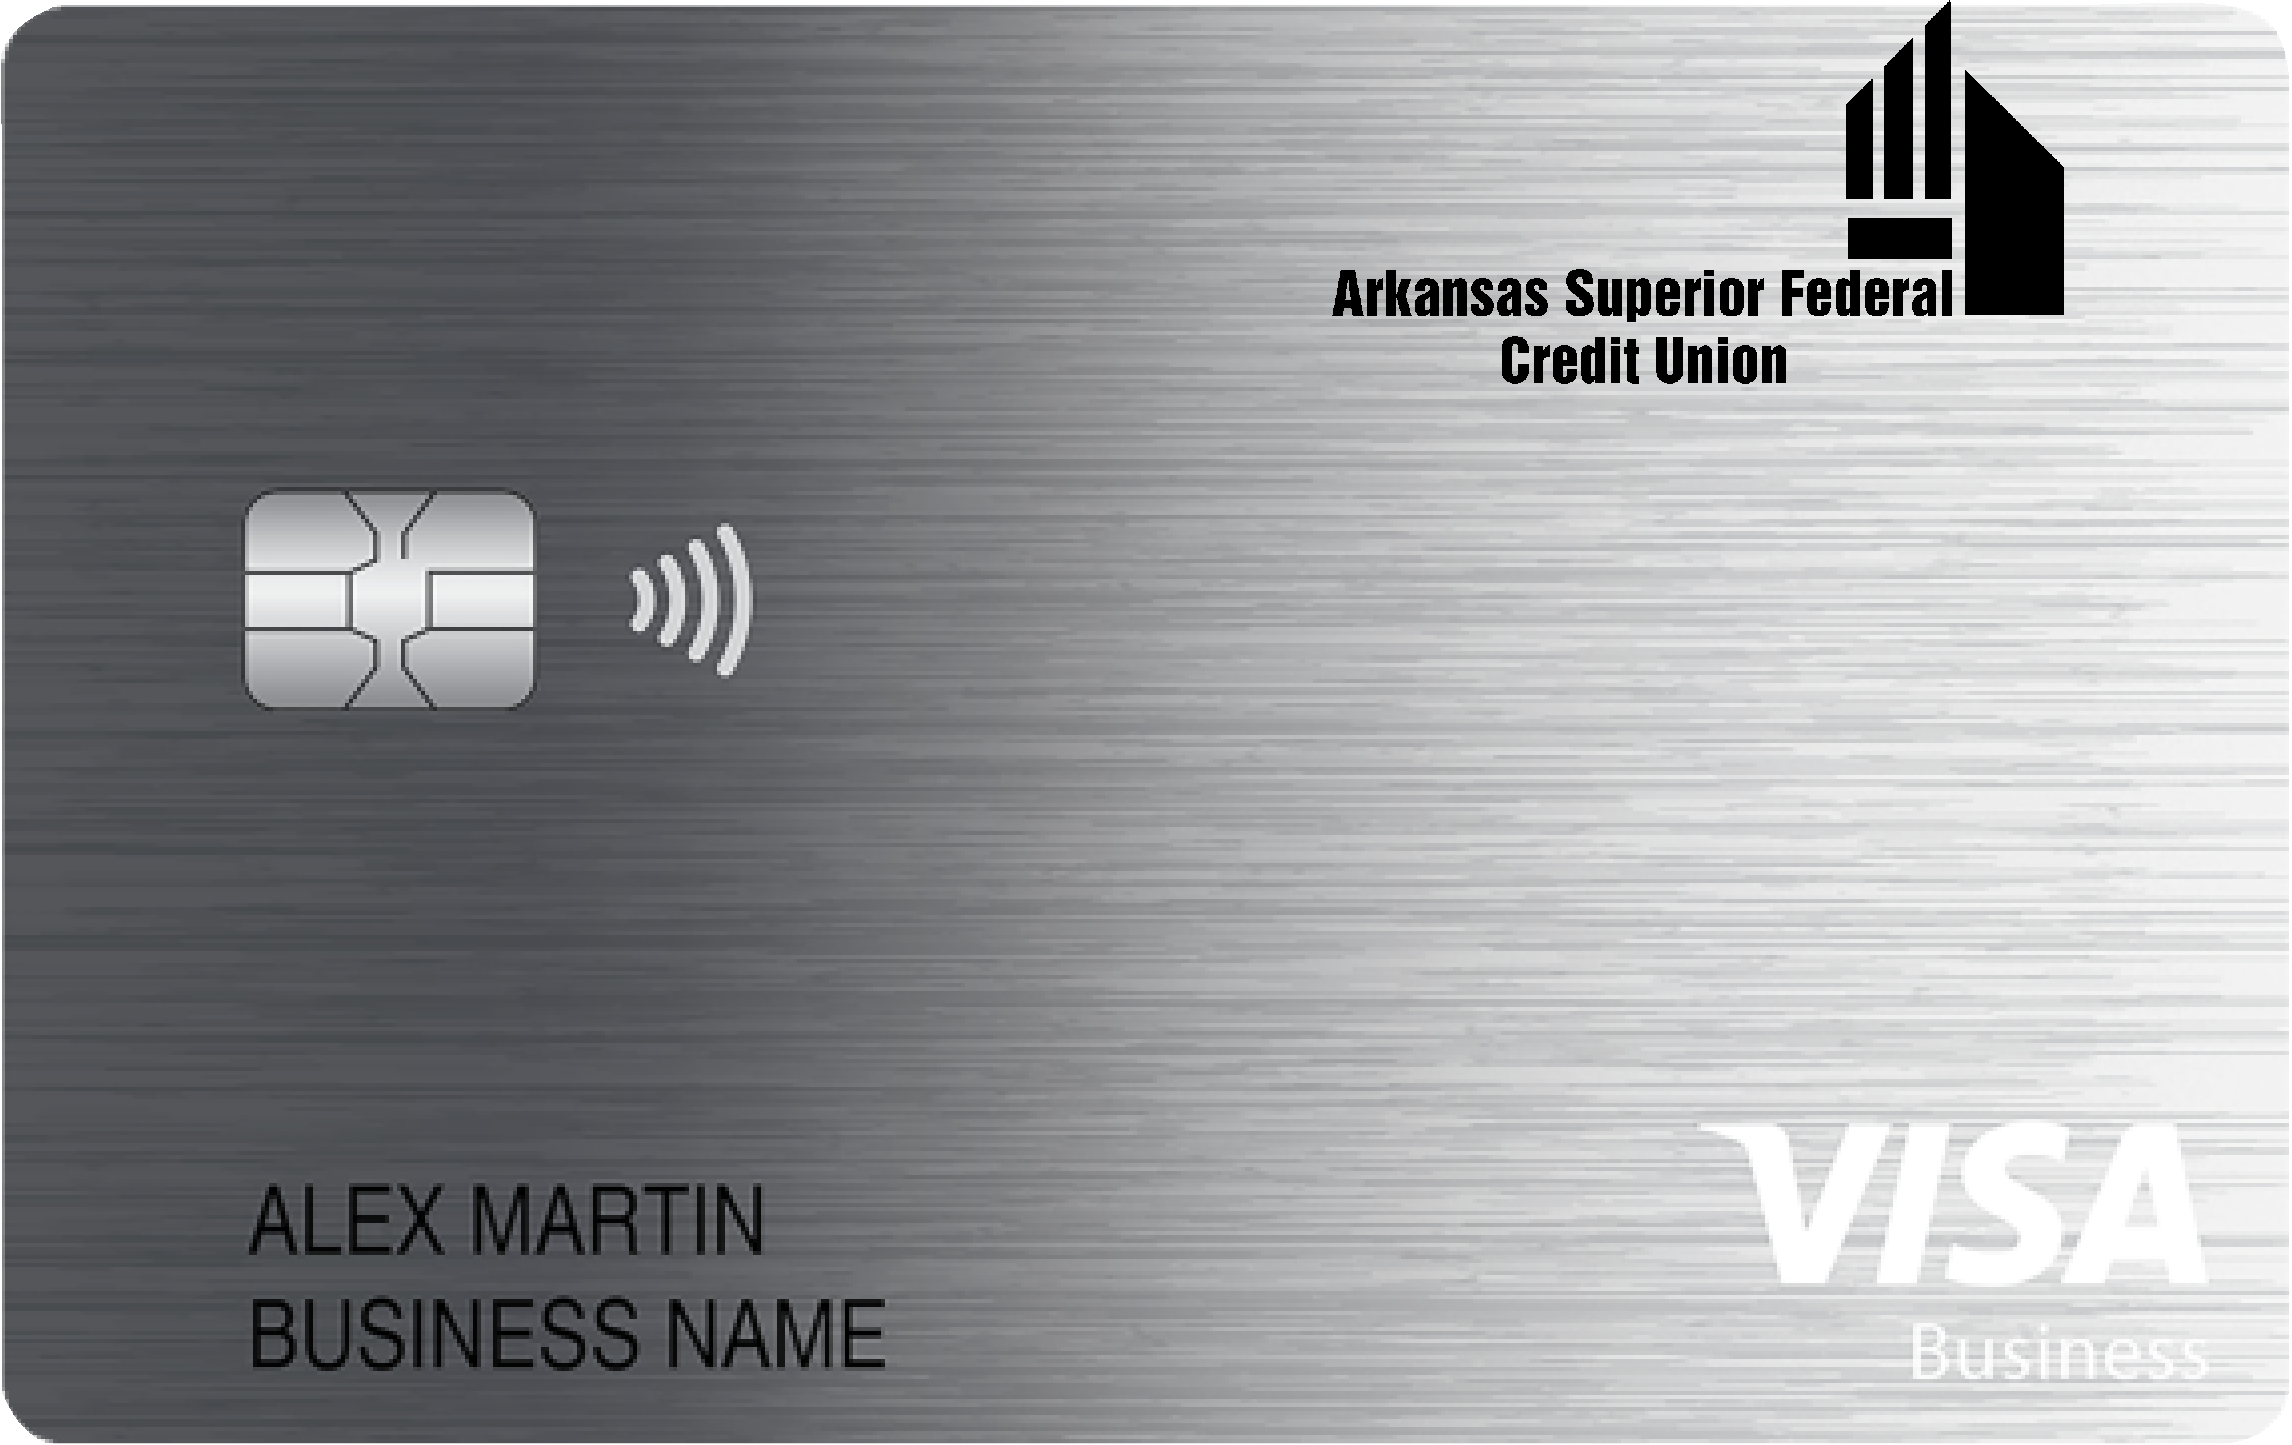 Arkansas Superior Federal Credit Union Business Card Card